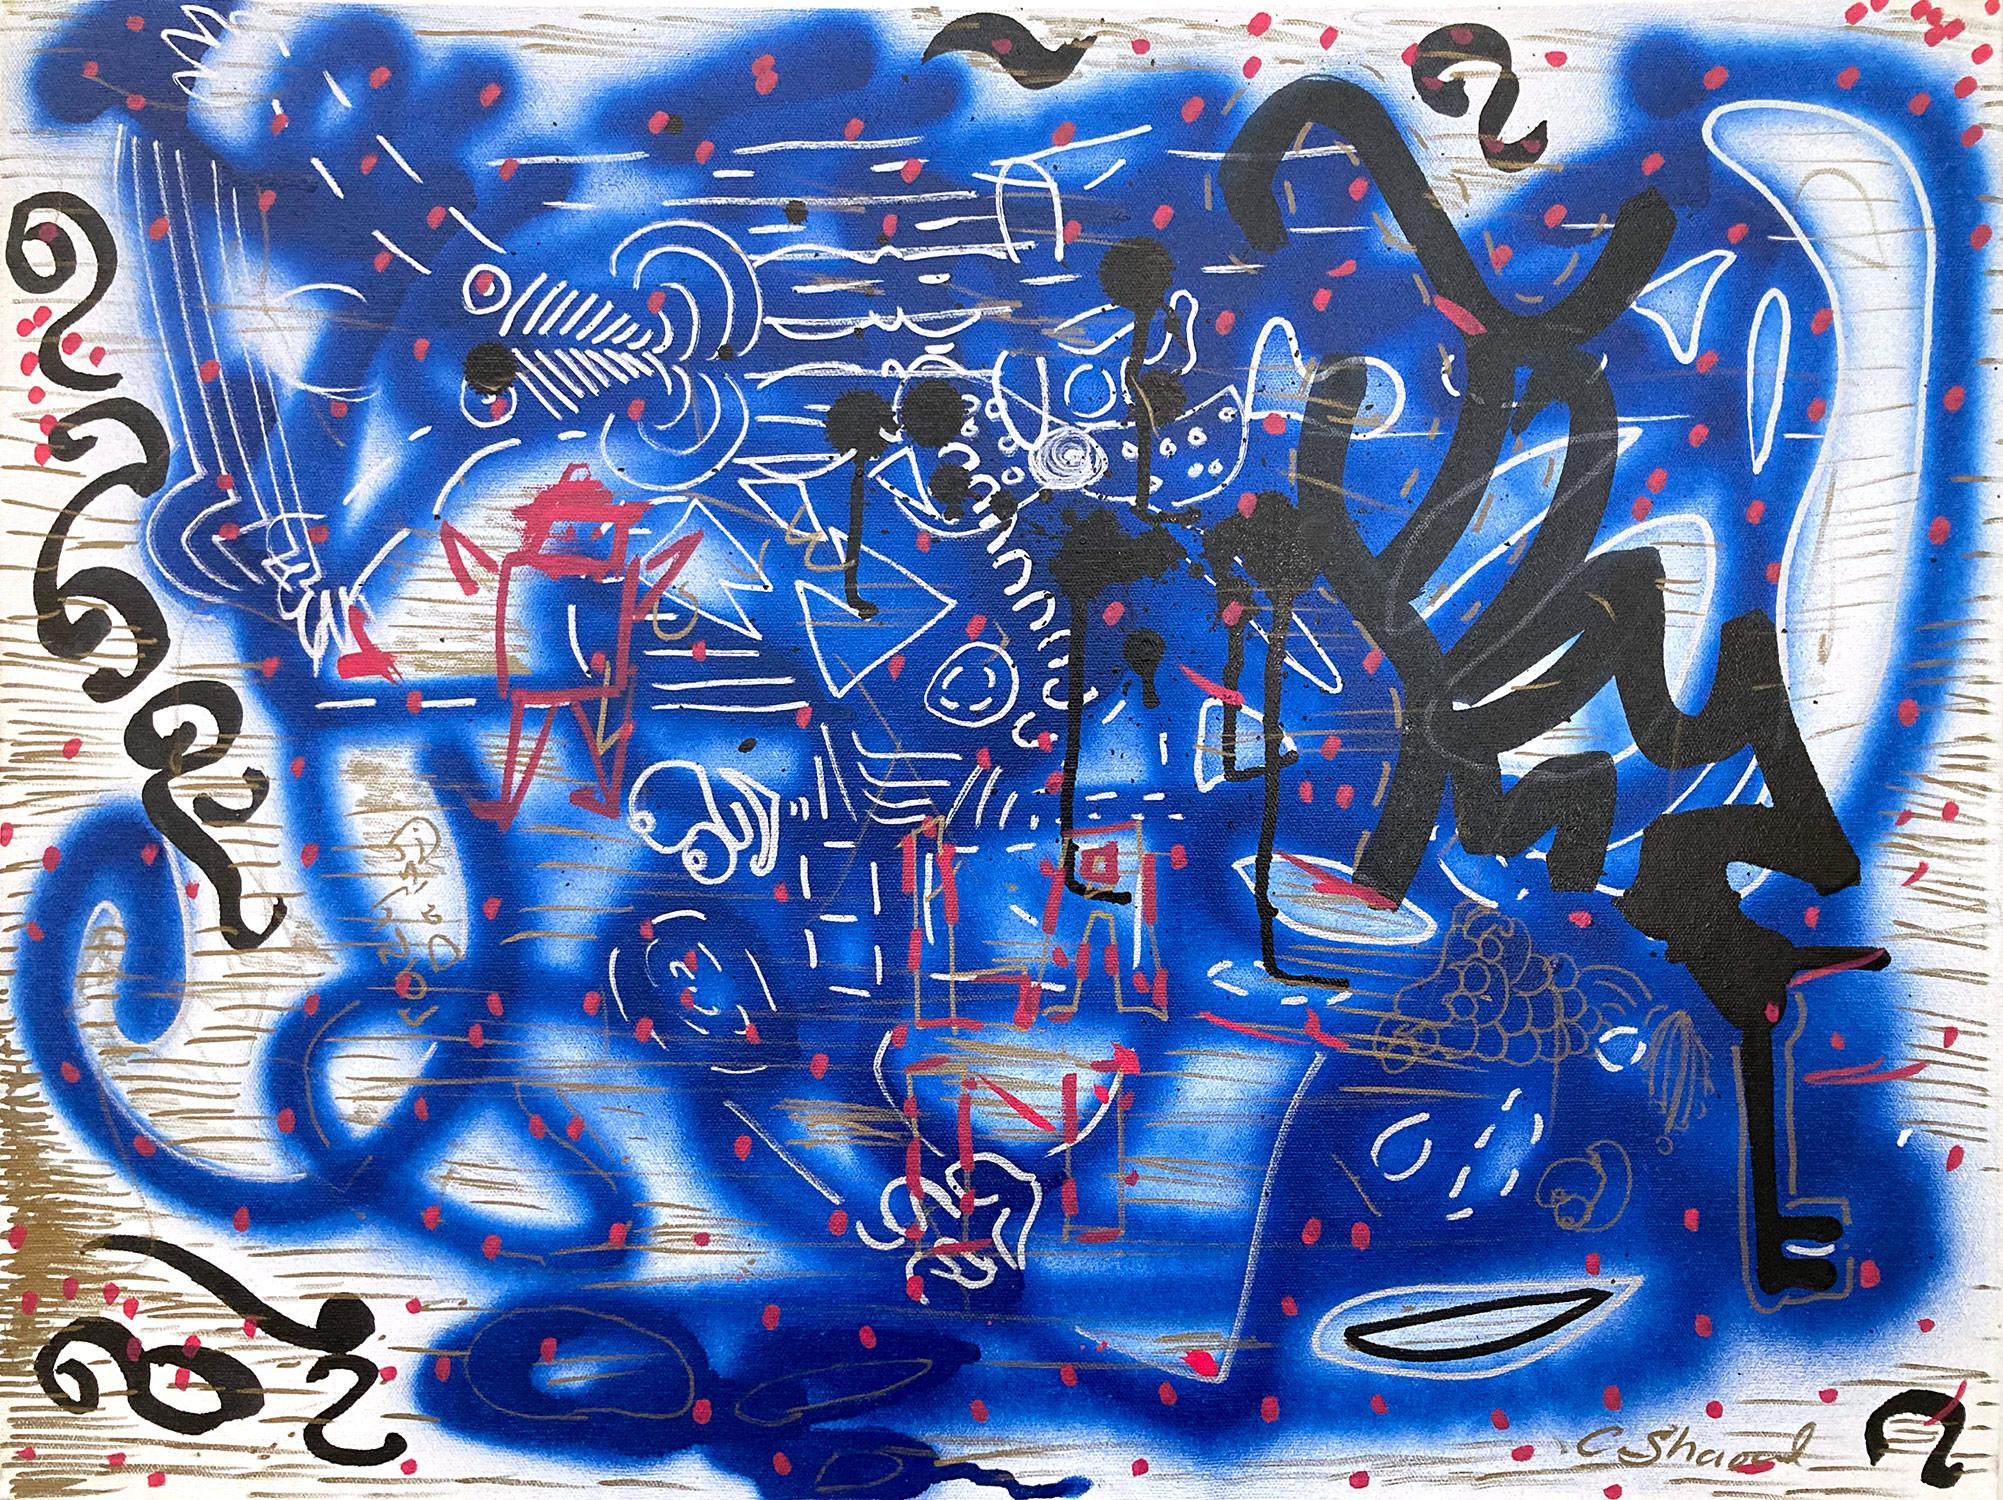 „Music Box“ Dekorierte Graffiti Street Art Acryl Sprühfarbe und Tinte auf Leinwand